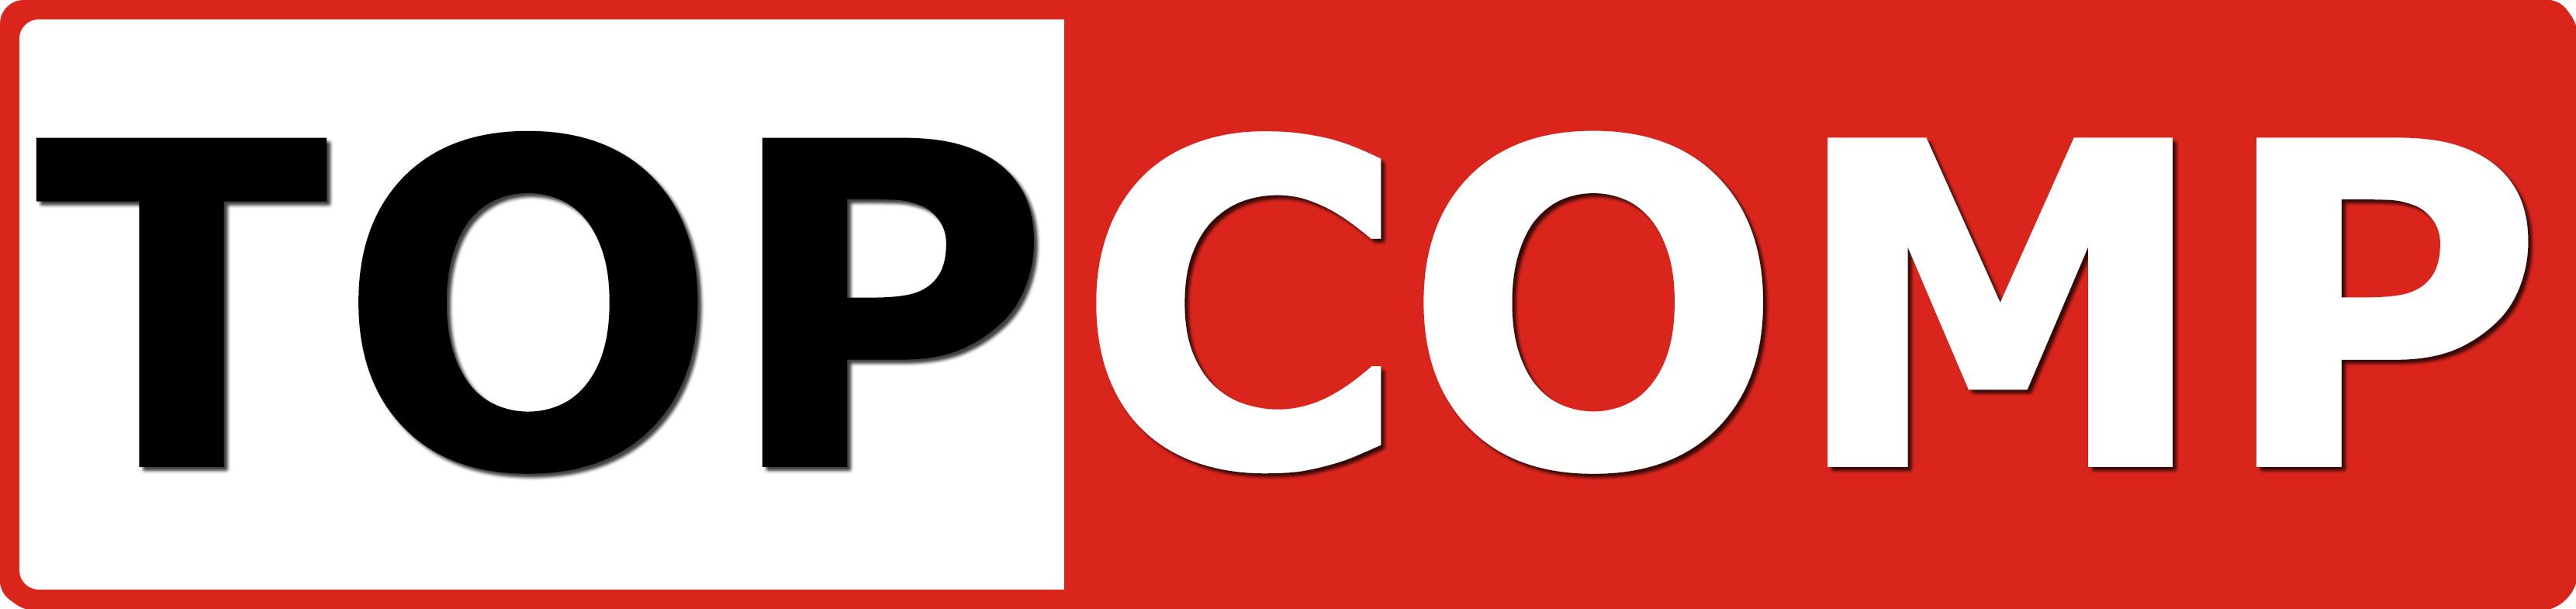 TopComp logo